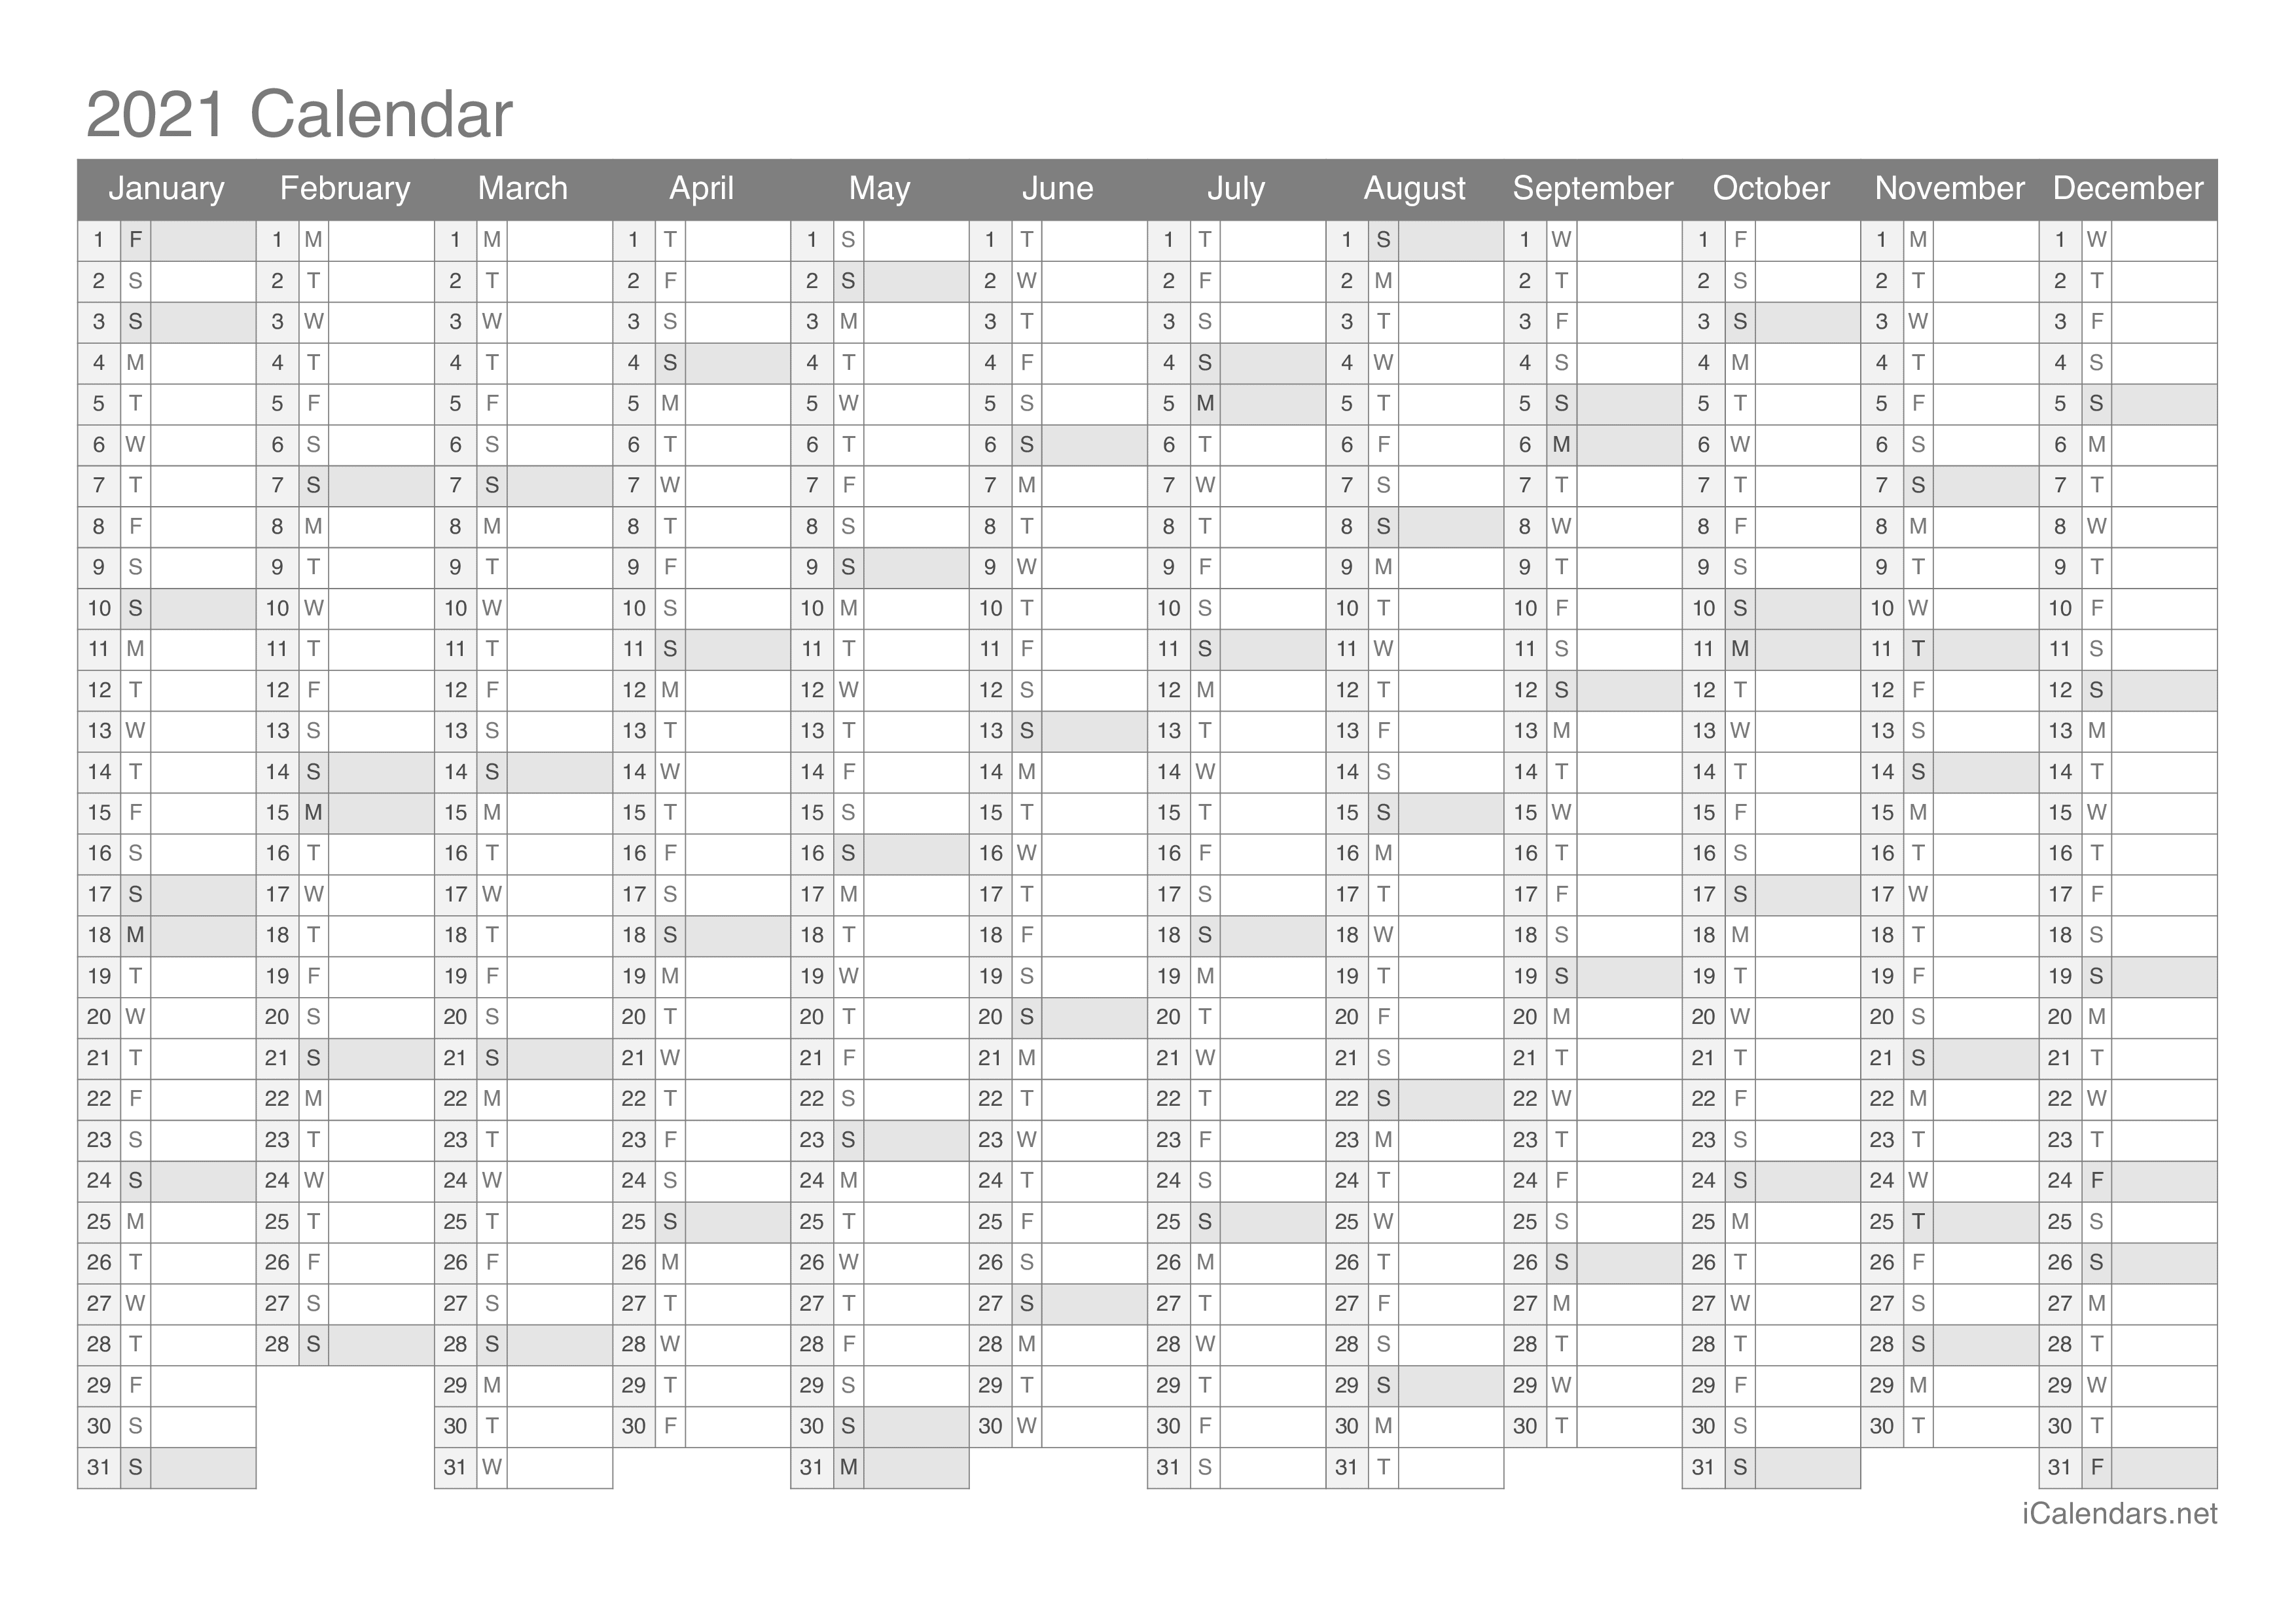 2021 Printable Calendar - PDF or Excel - icalendars.net